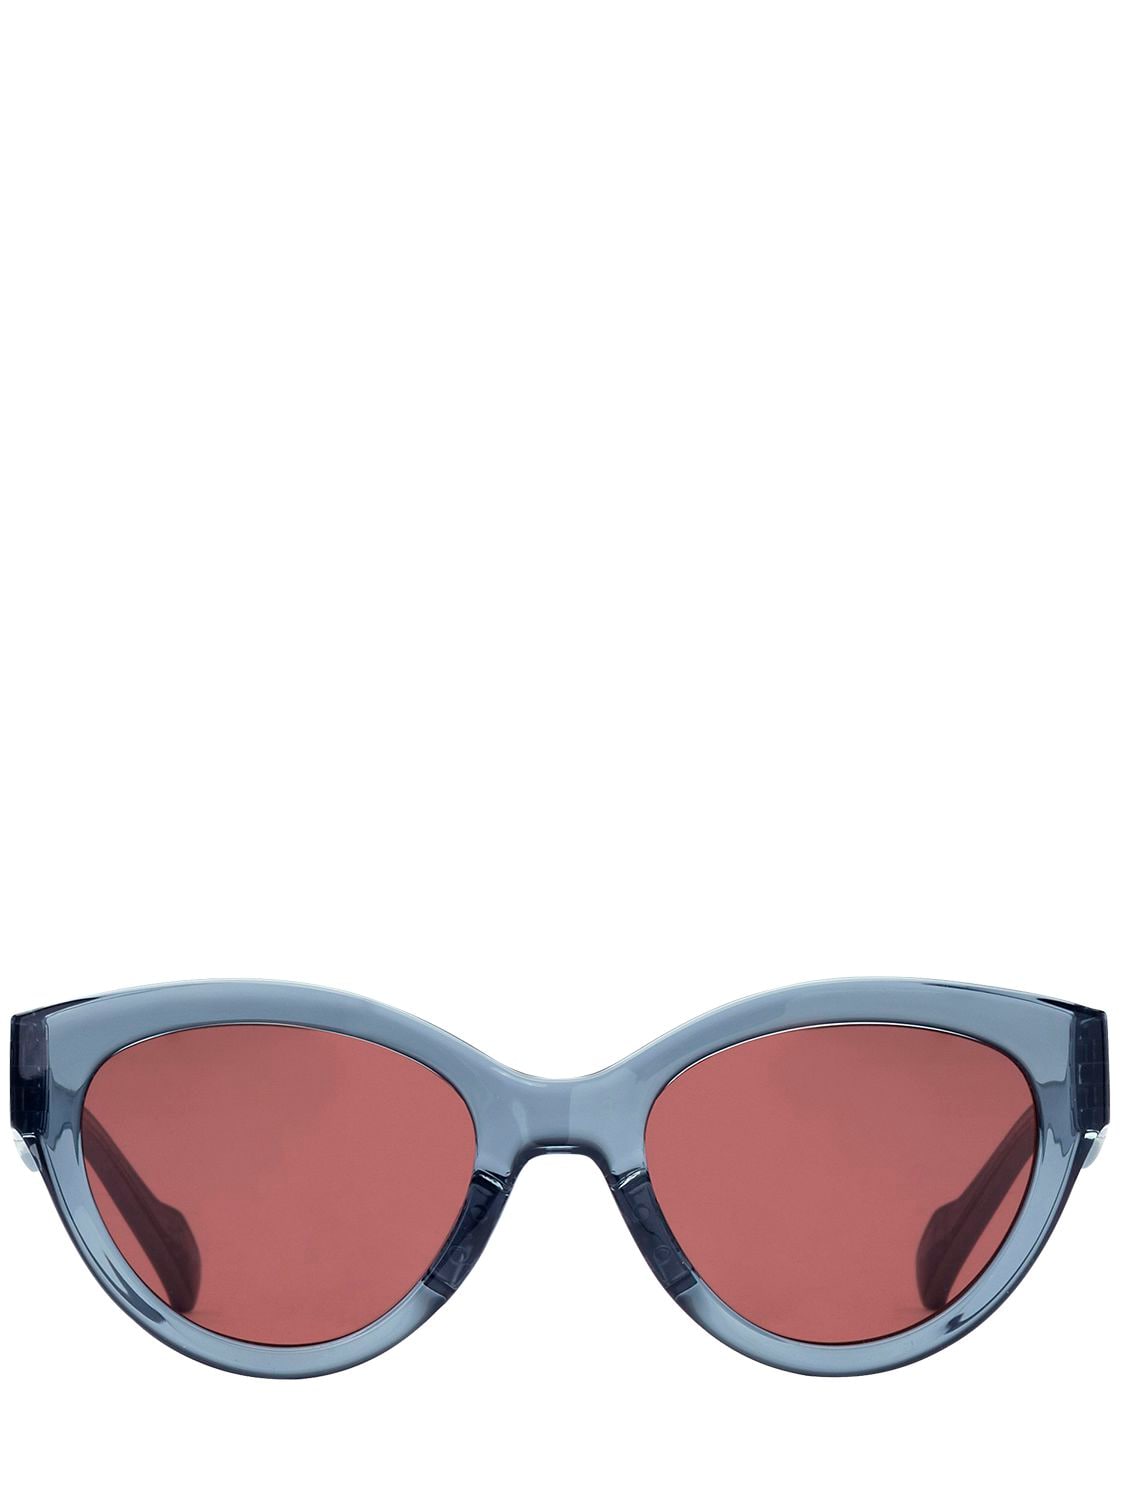 Adidas Originals By Italia Independent Acetate Cat-eye Sunglasses In Grey